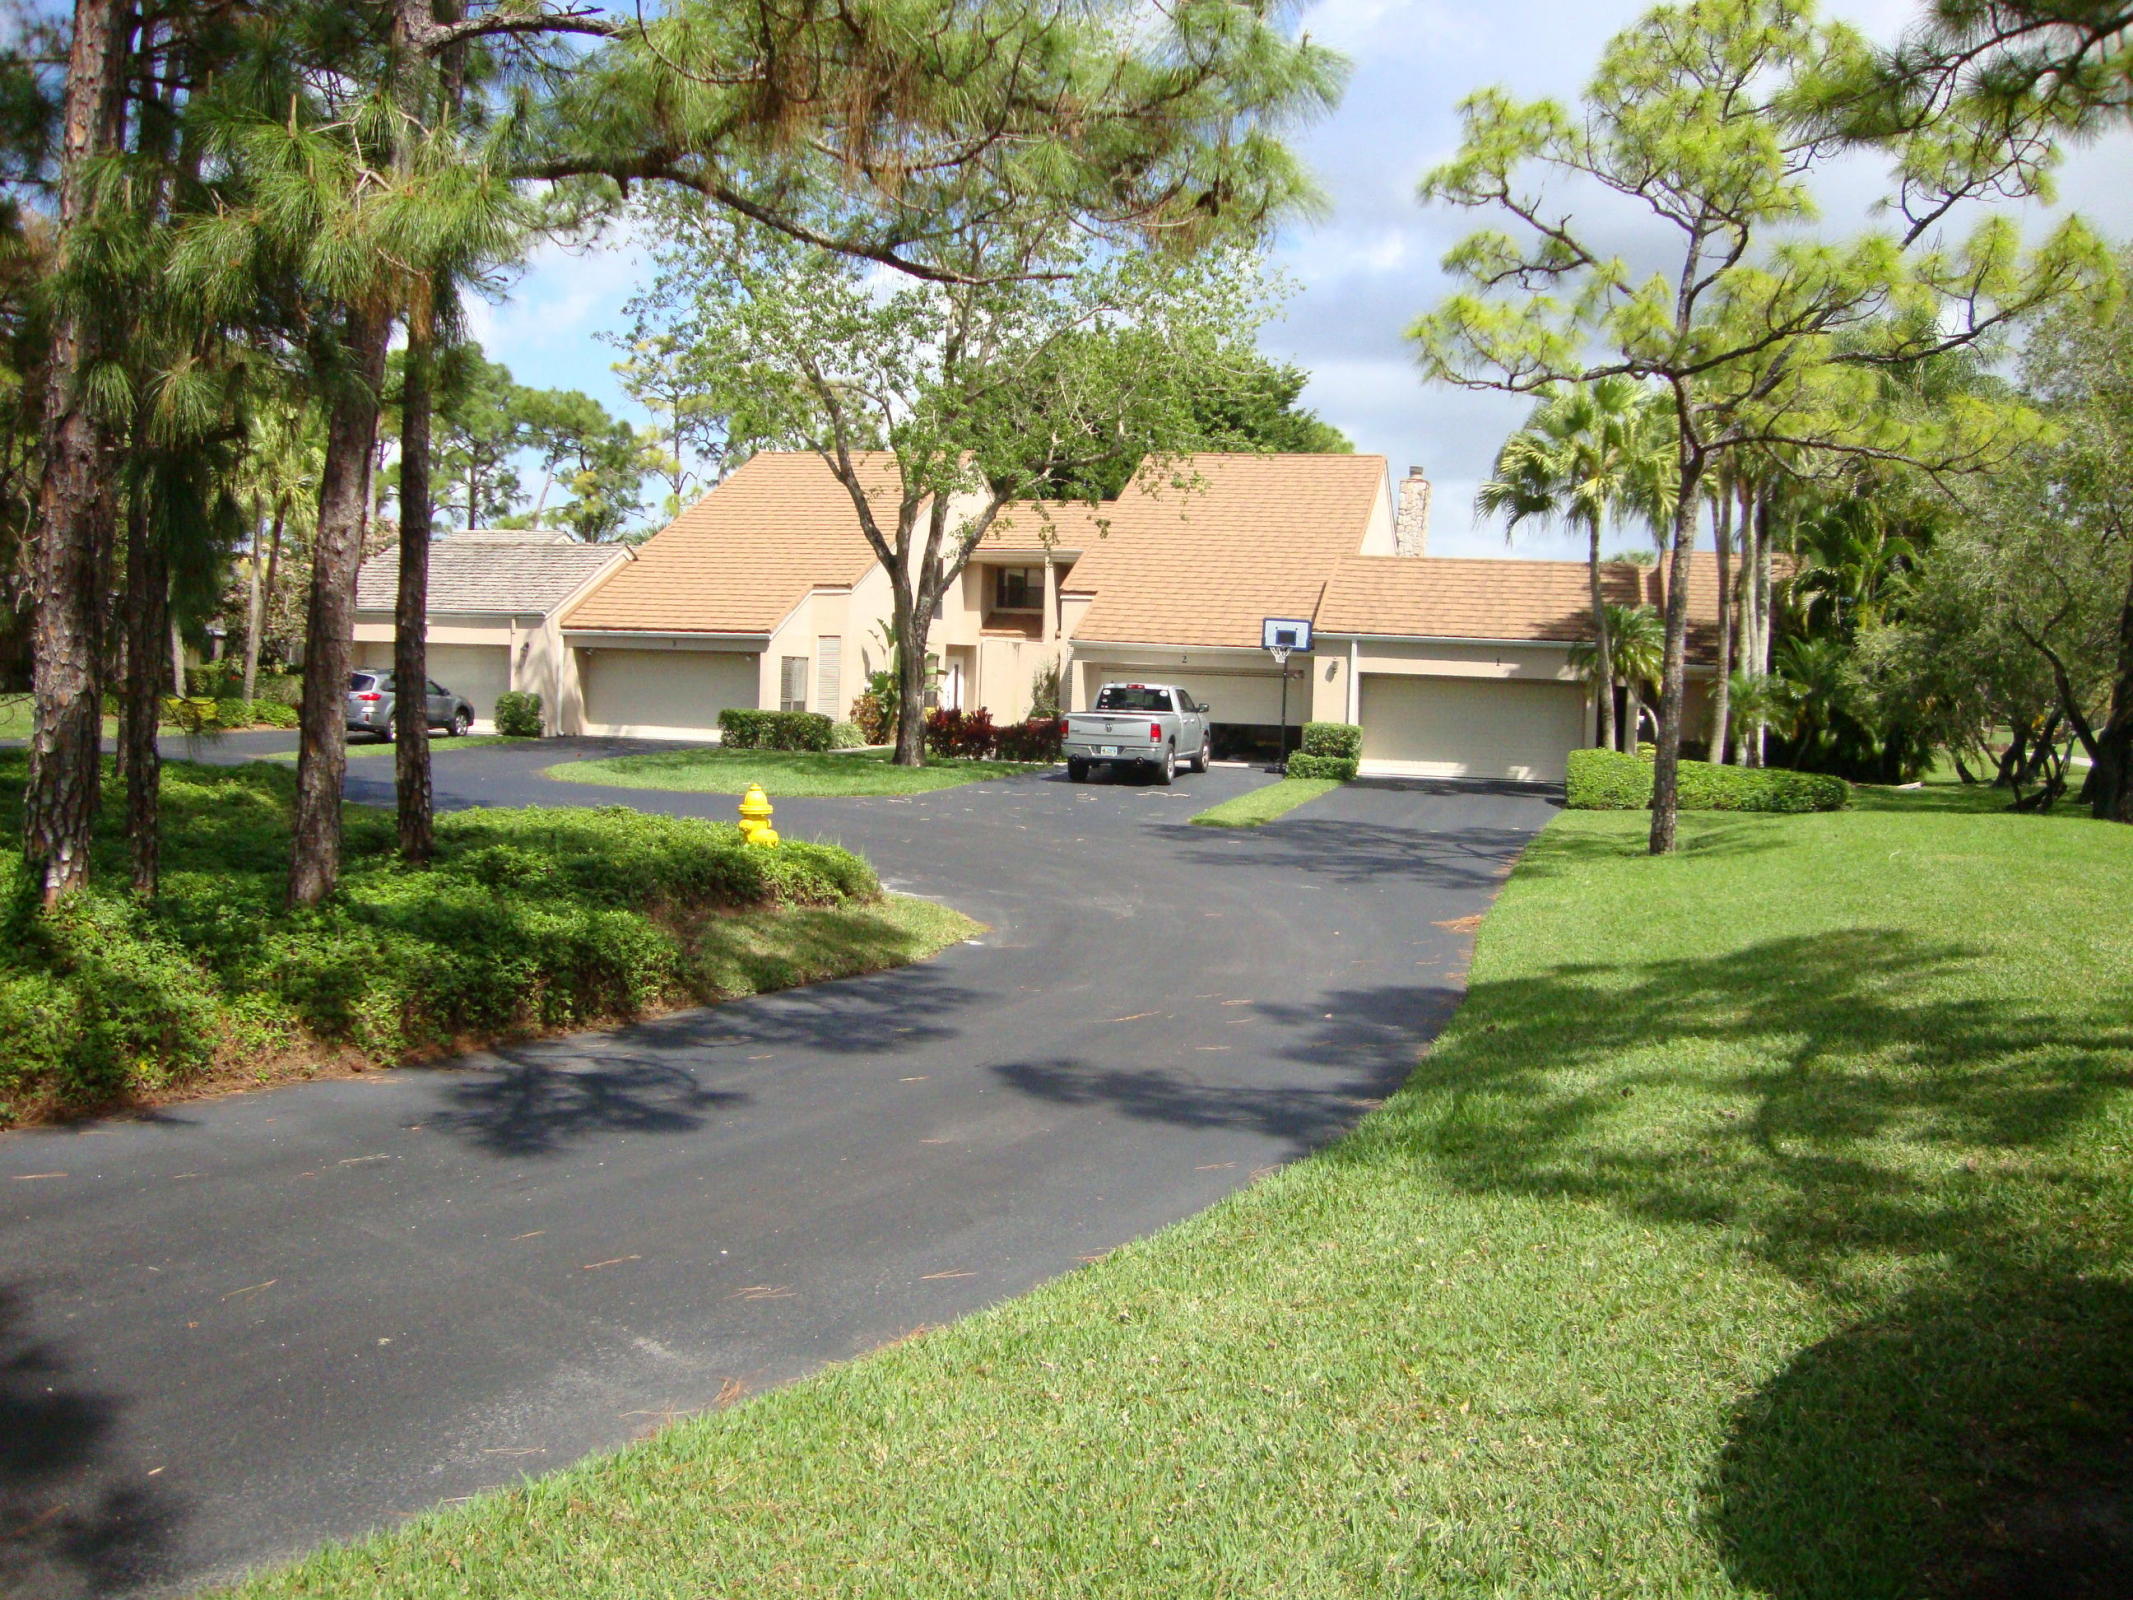 Villas of Burwick at PGA National Palm Beach Gardens Homes for Sale